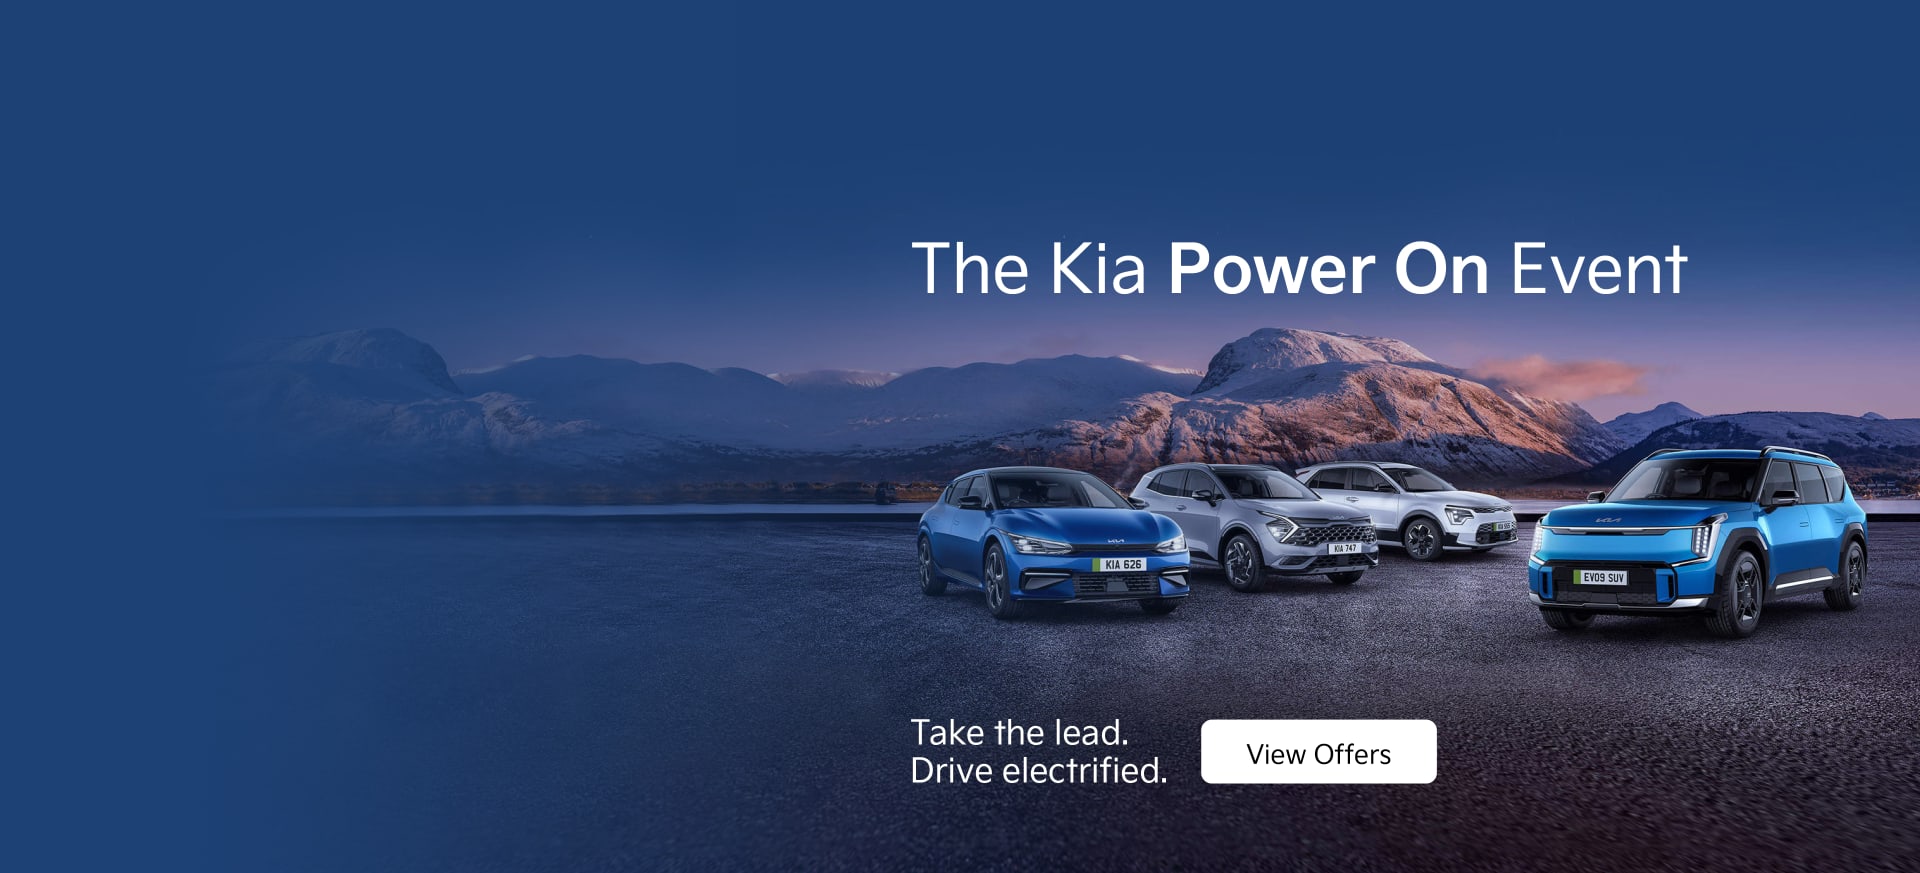 Kia Power On Event 